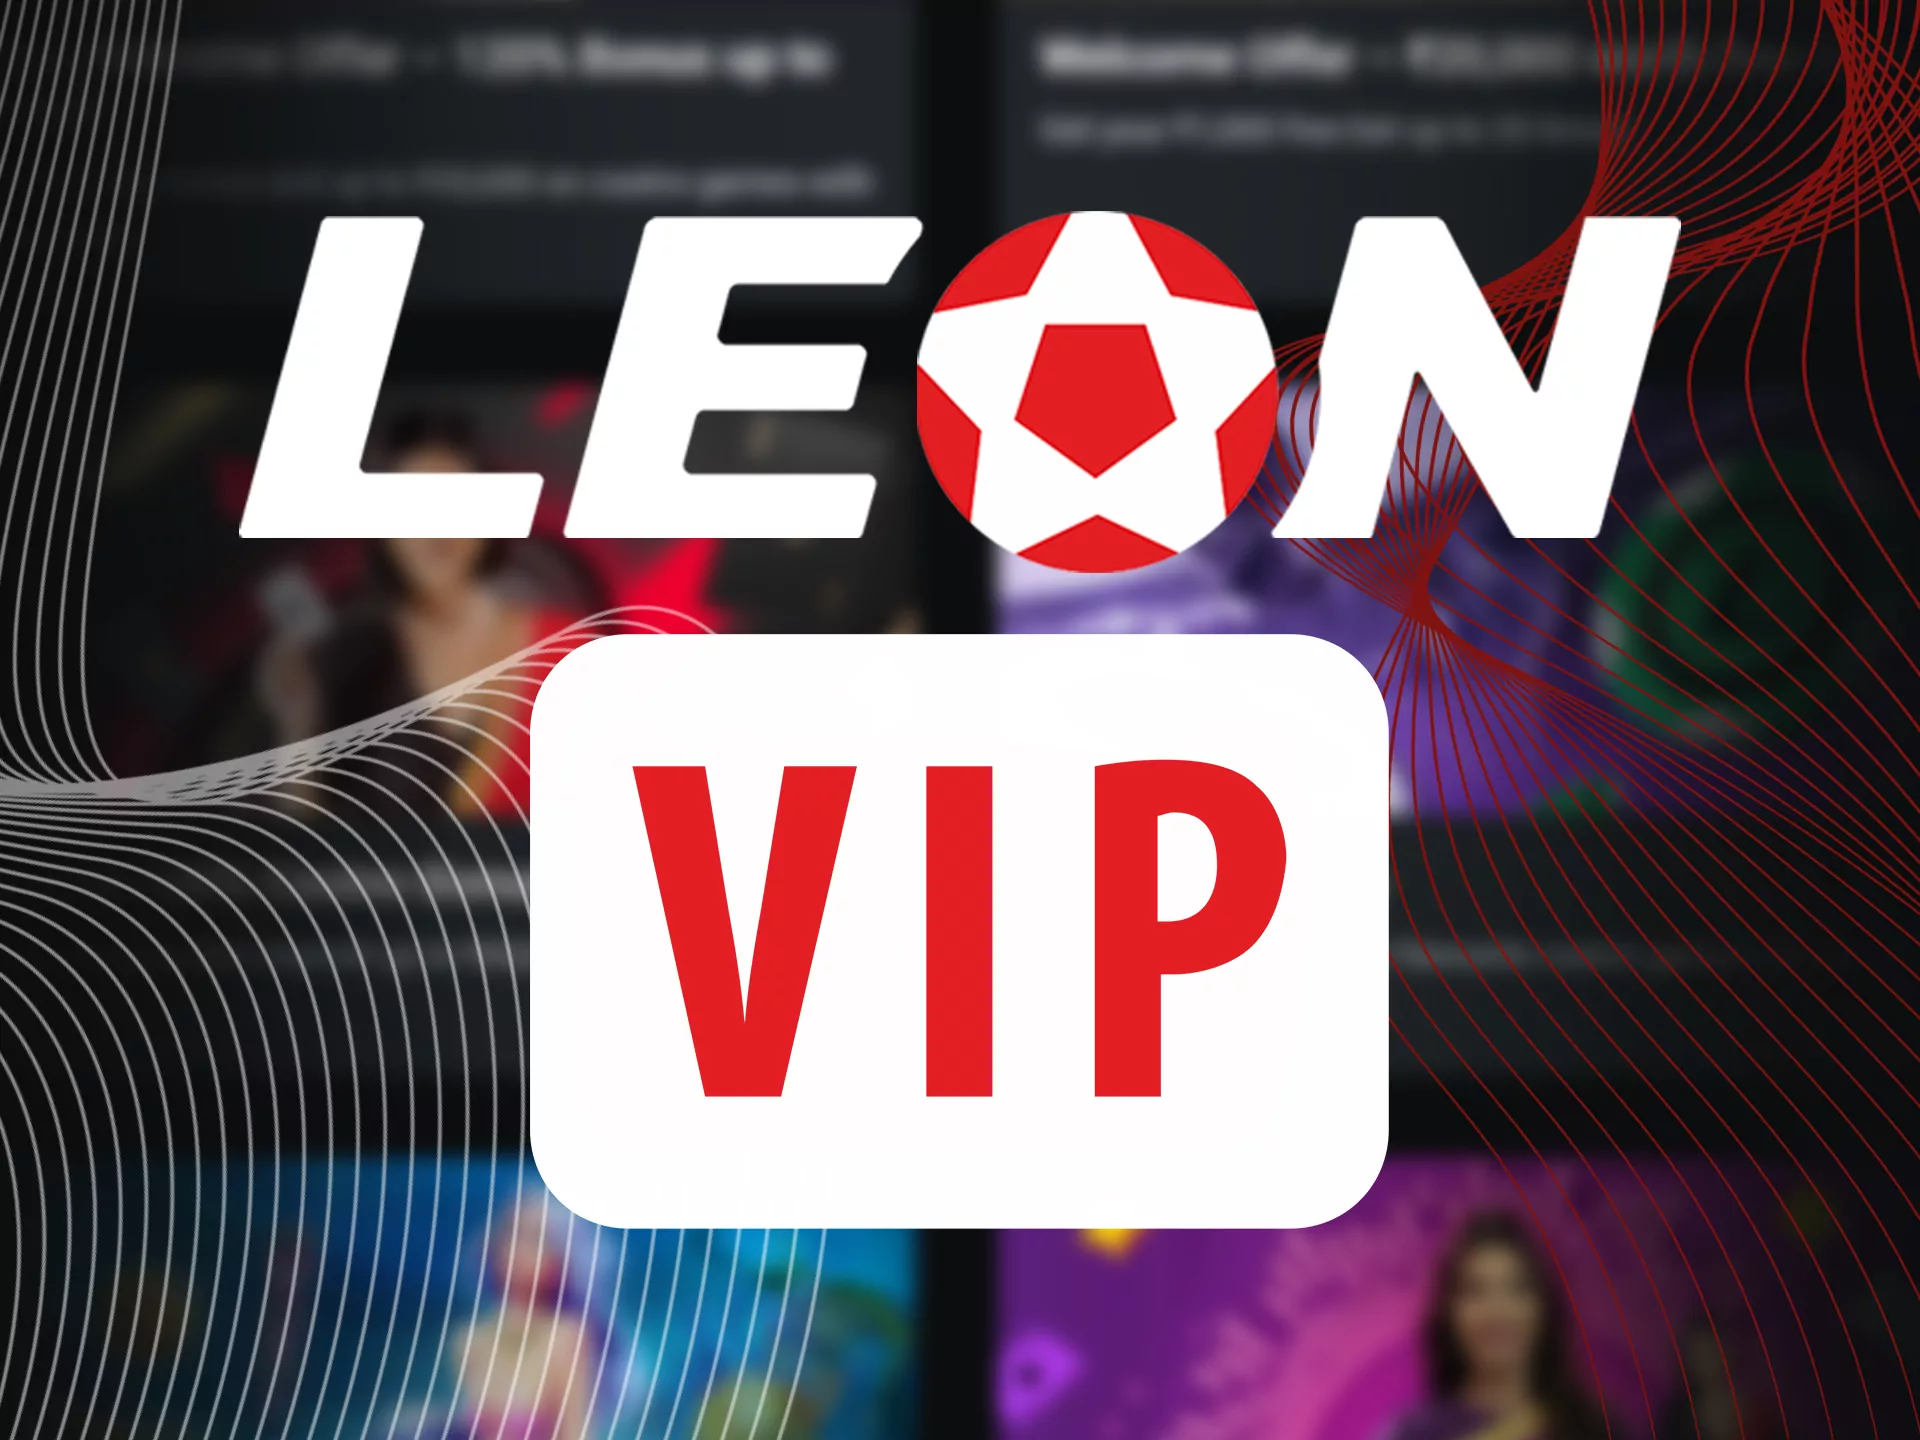 Participate in the Leon Bet VIP program.